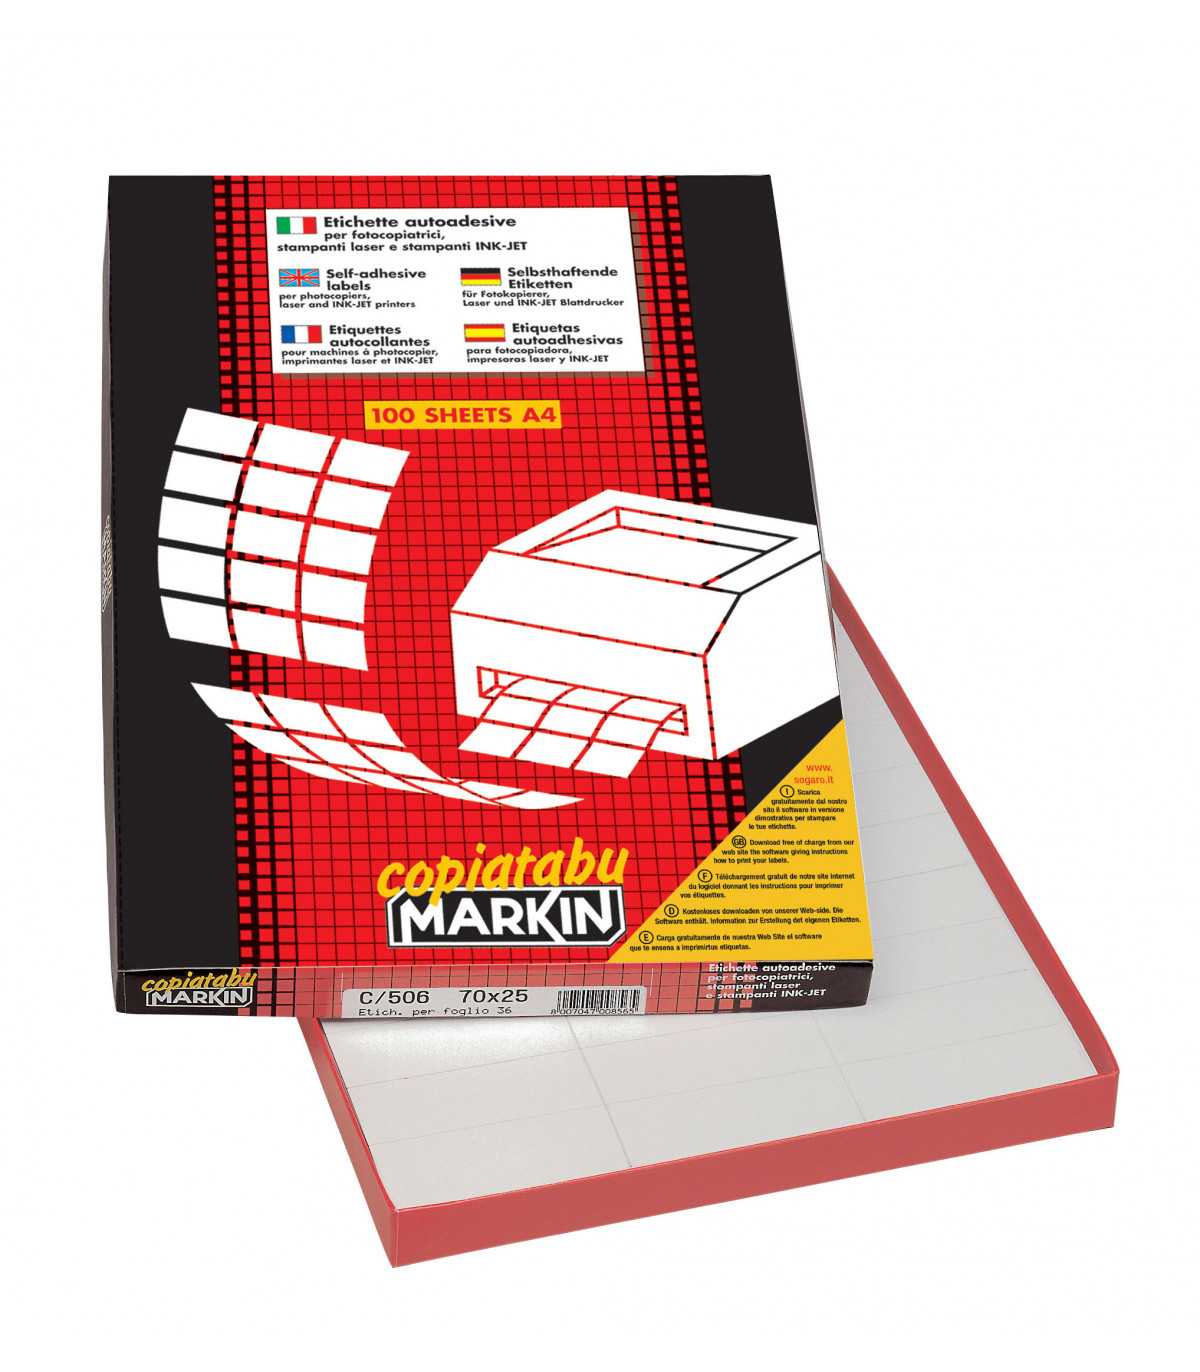 Etichette Markin A4 A/400 (65et/fg) - Shop Online - Immagine Srl